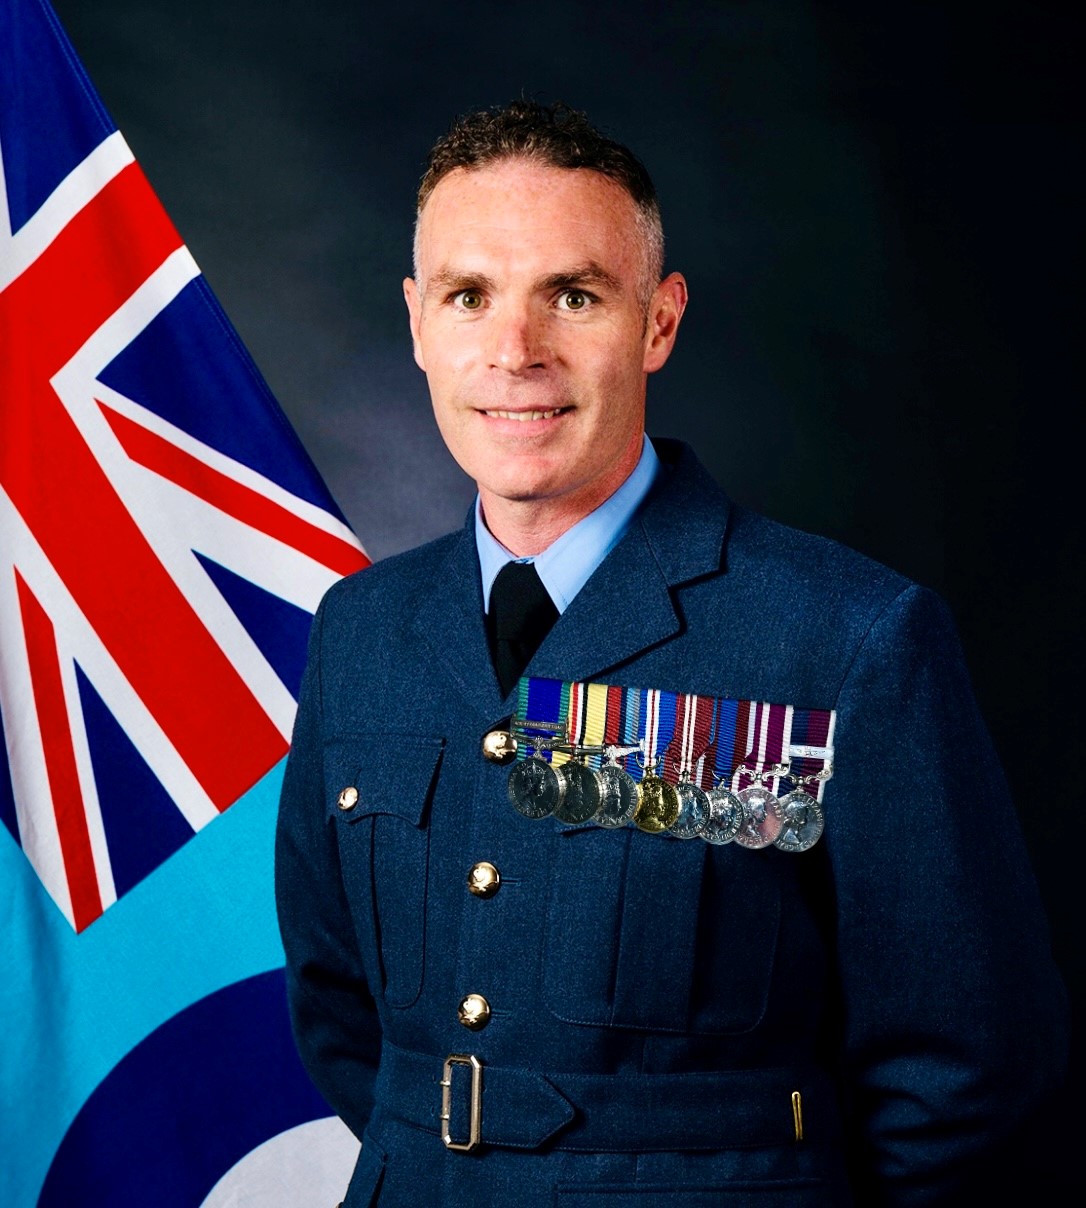 Image shows official portrait of RAF Personnel.